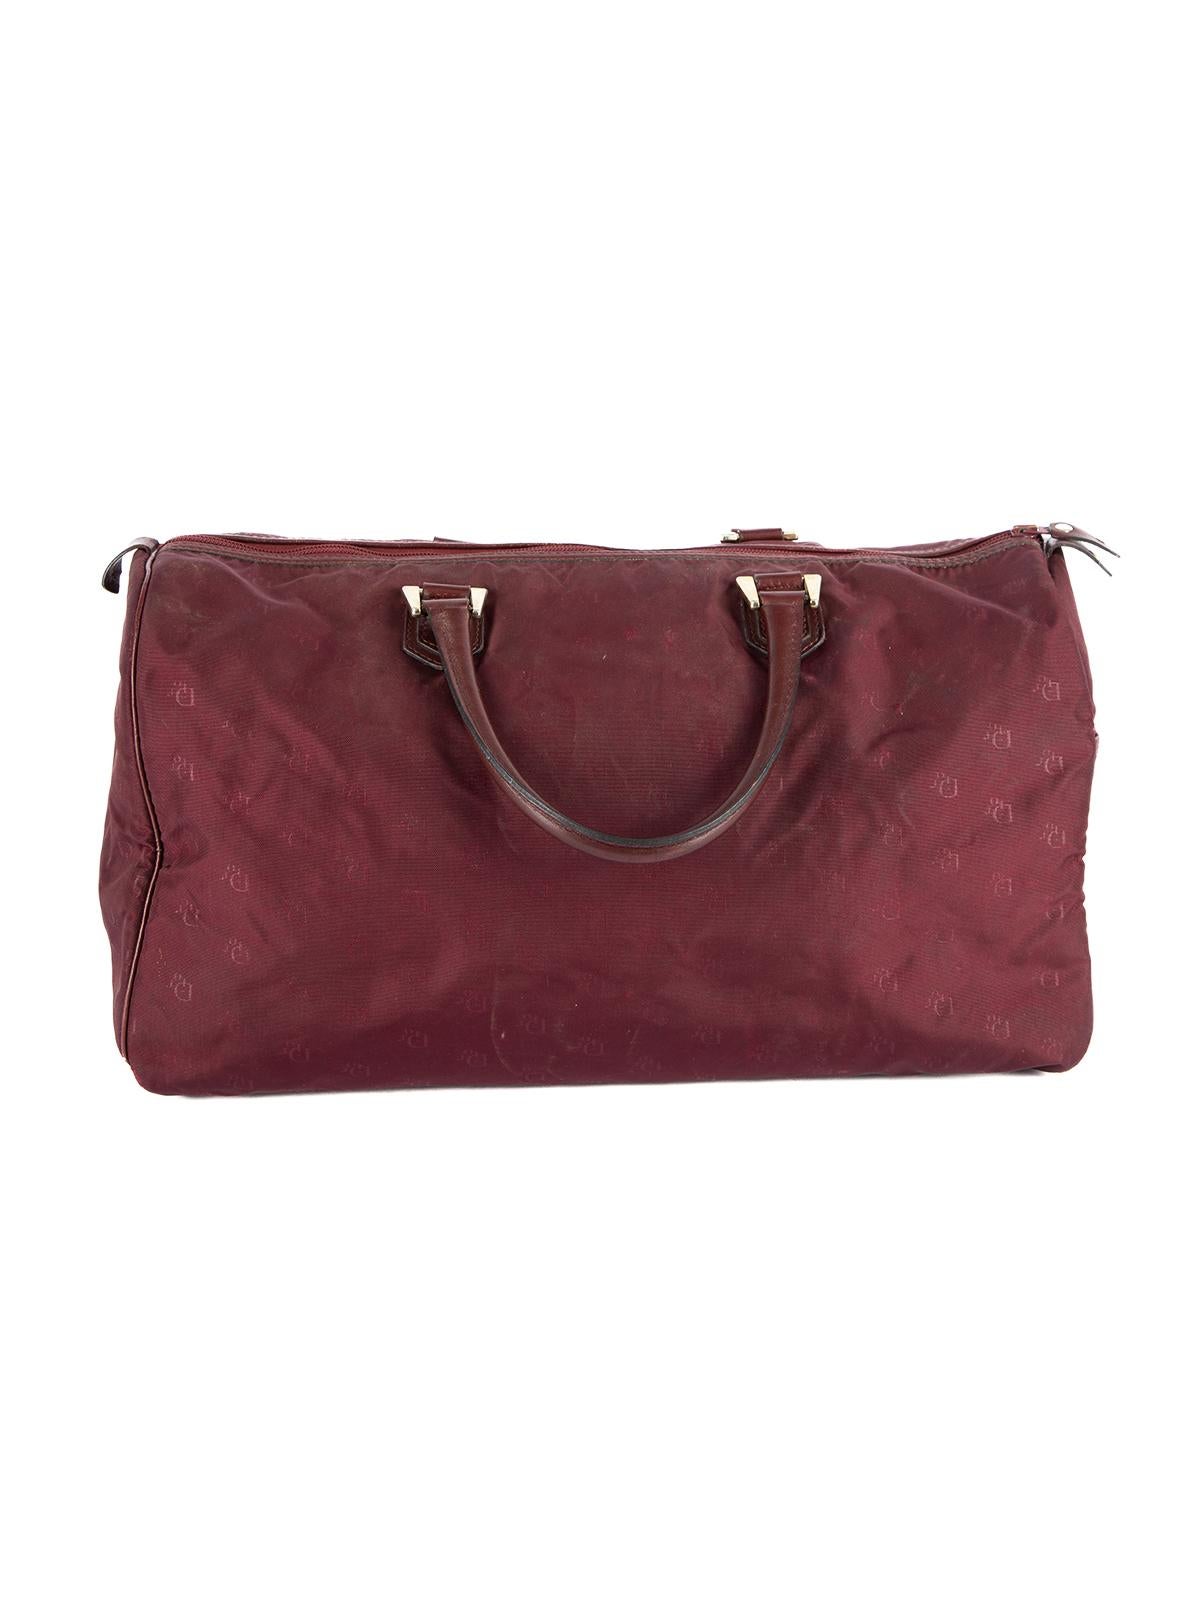 Dior Women's Vintage Burgundy Trotter Duffle Bag For Sale 1